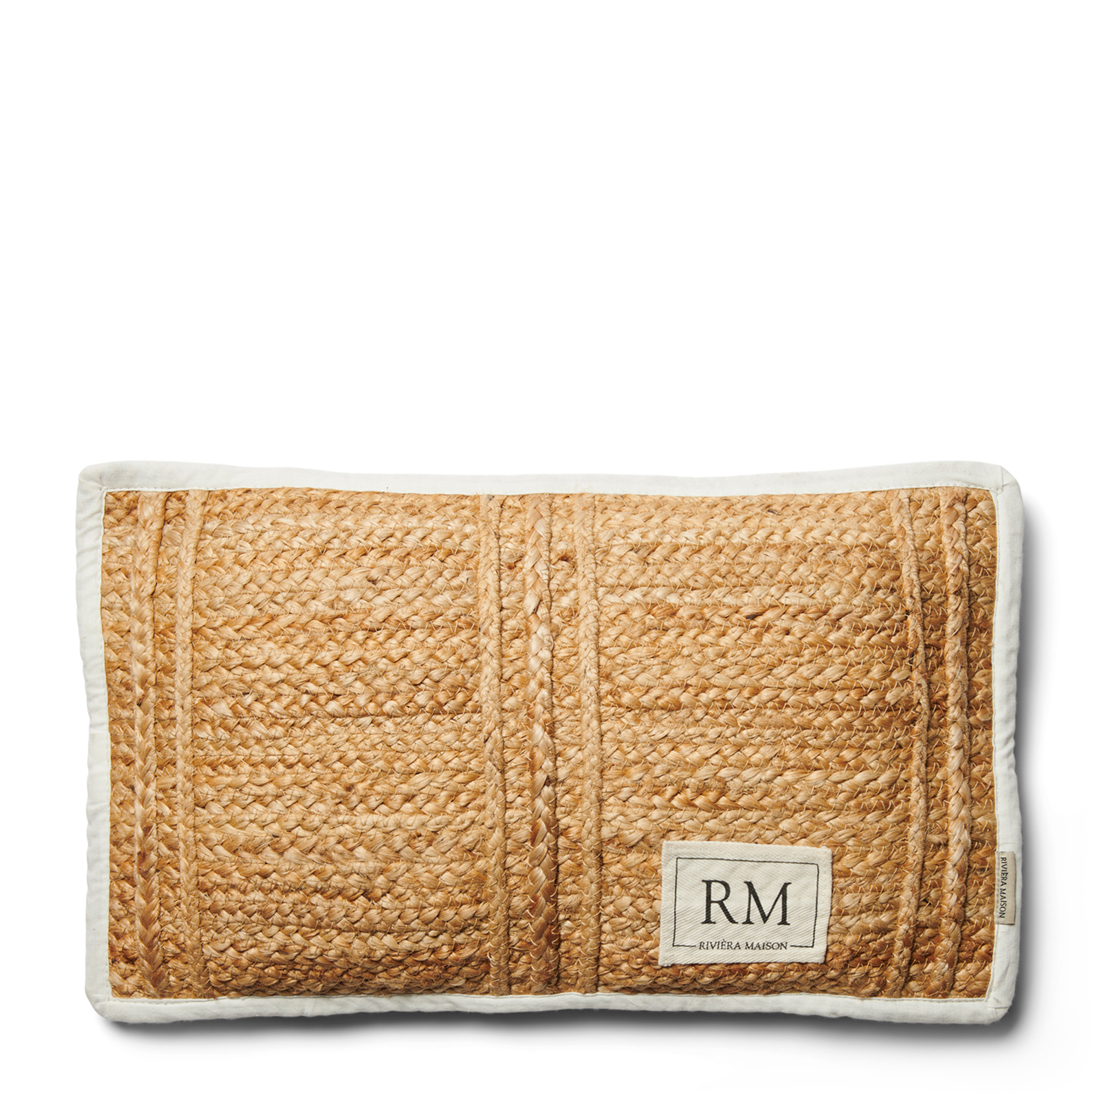 Riviera Maison RM Emmaus Pillow Cover 50x30 - 30.0x50.0x cm